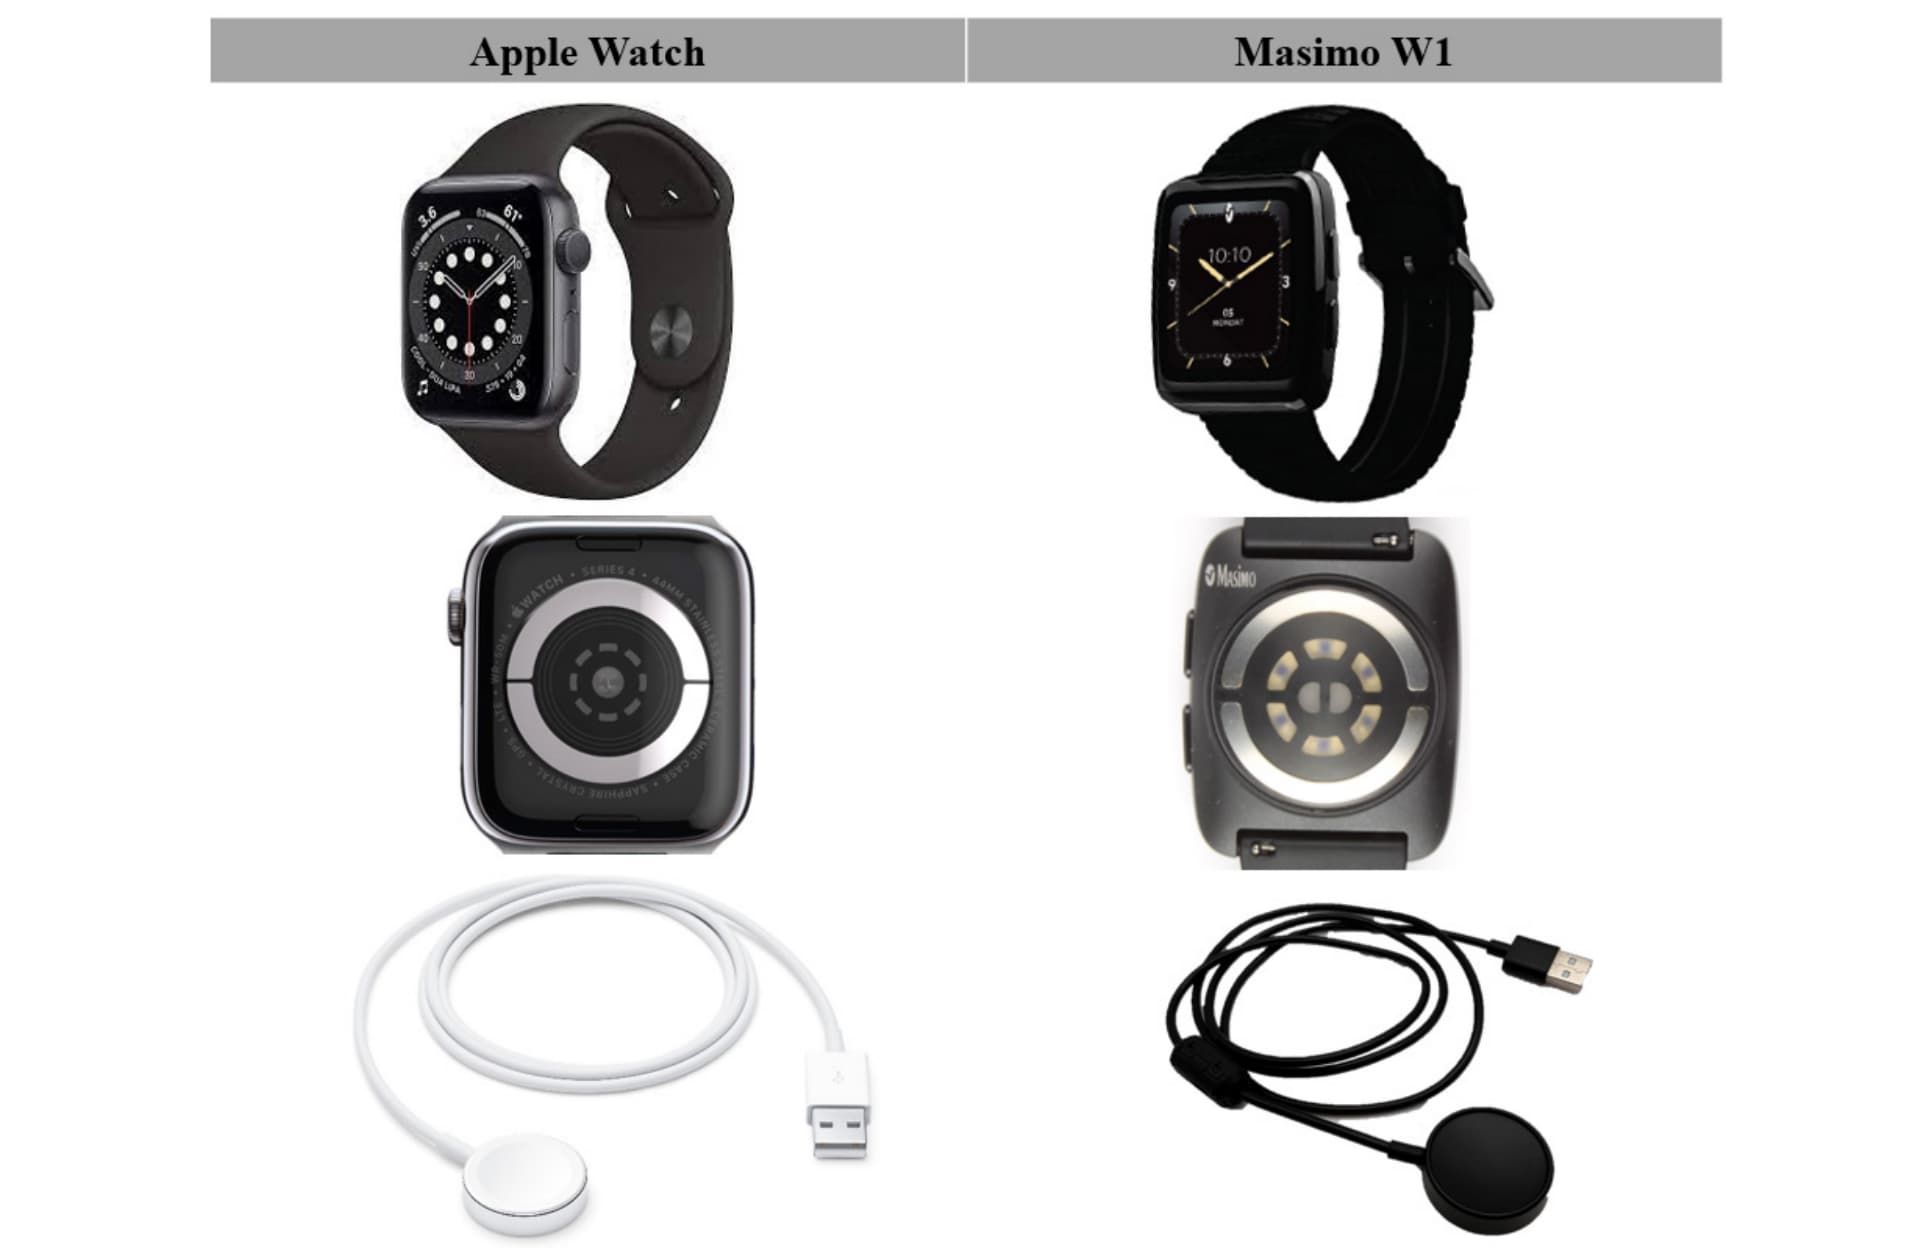 تصویر اپل واچ و ساعت W1 ماسیمو و کابل شارژ آن‌ها